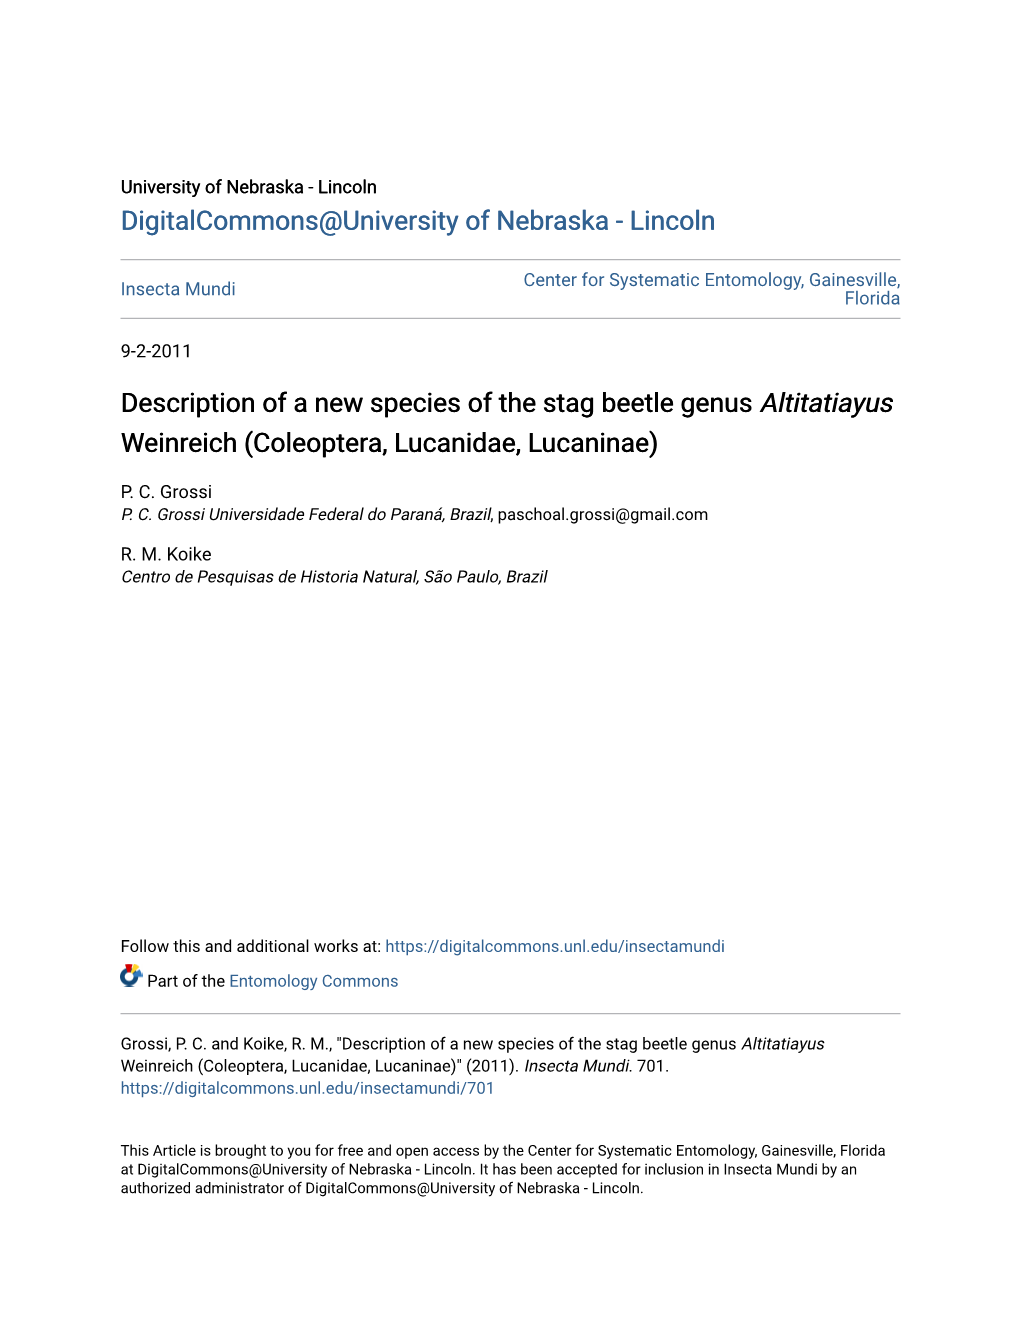 Description of a New Species of the Stag Beetle Genus &lt;I&gt;Altitatiayus&lt;/I